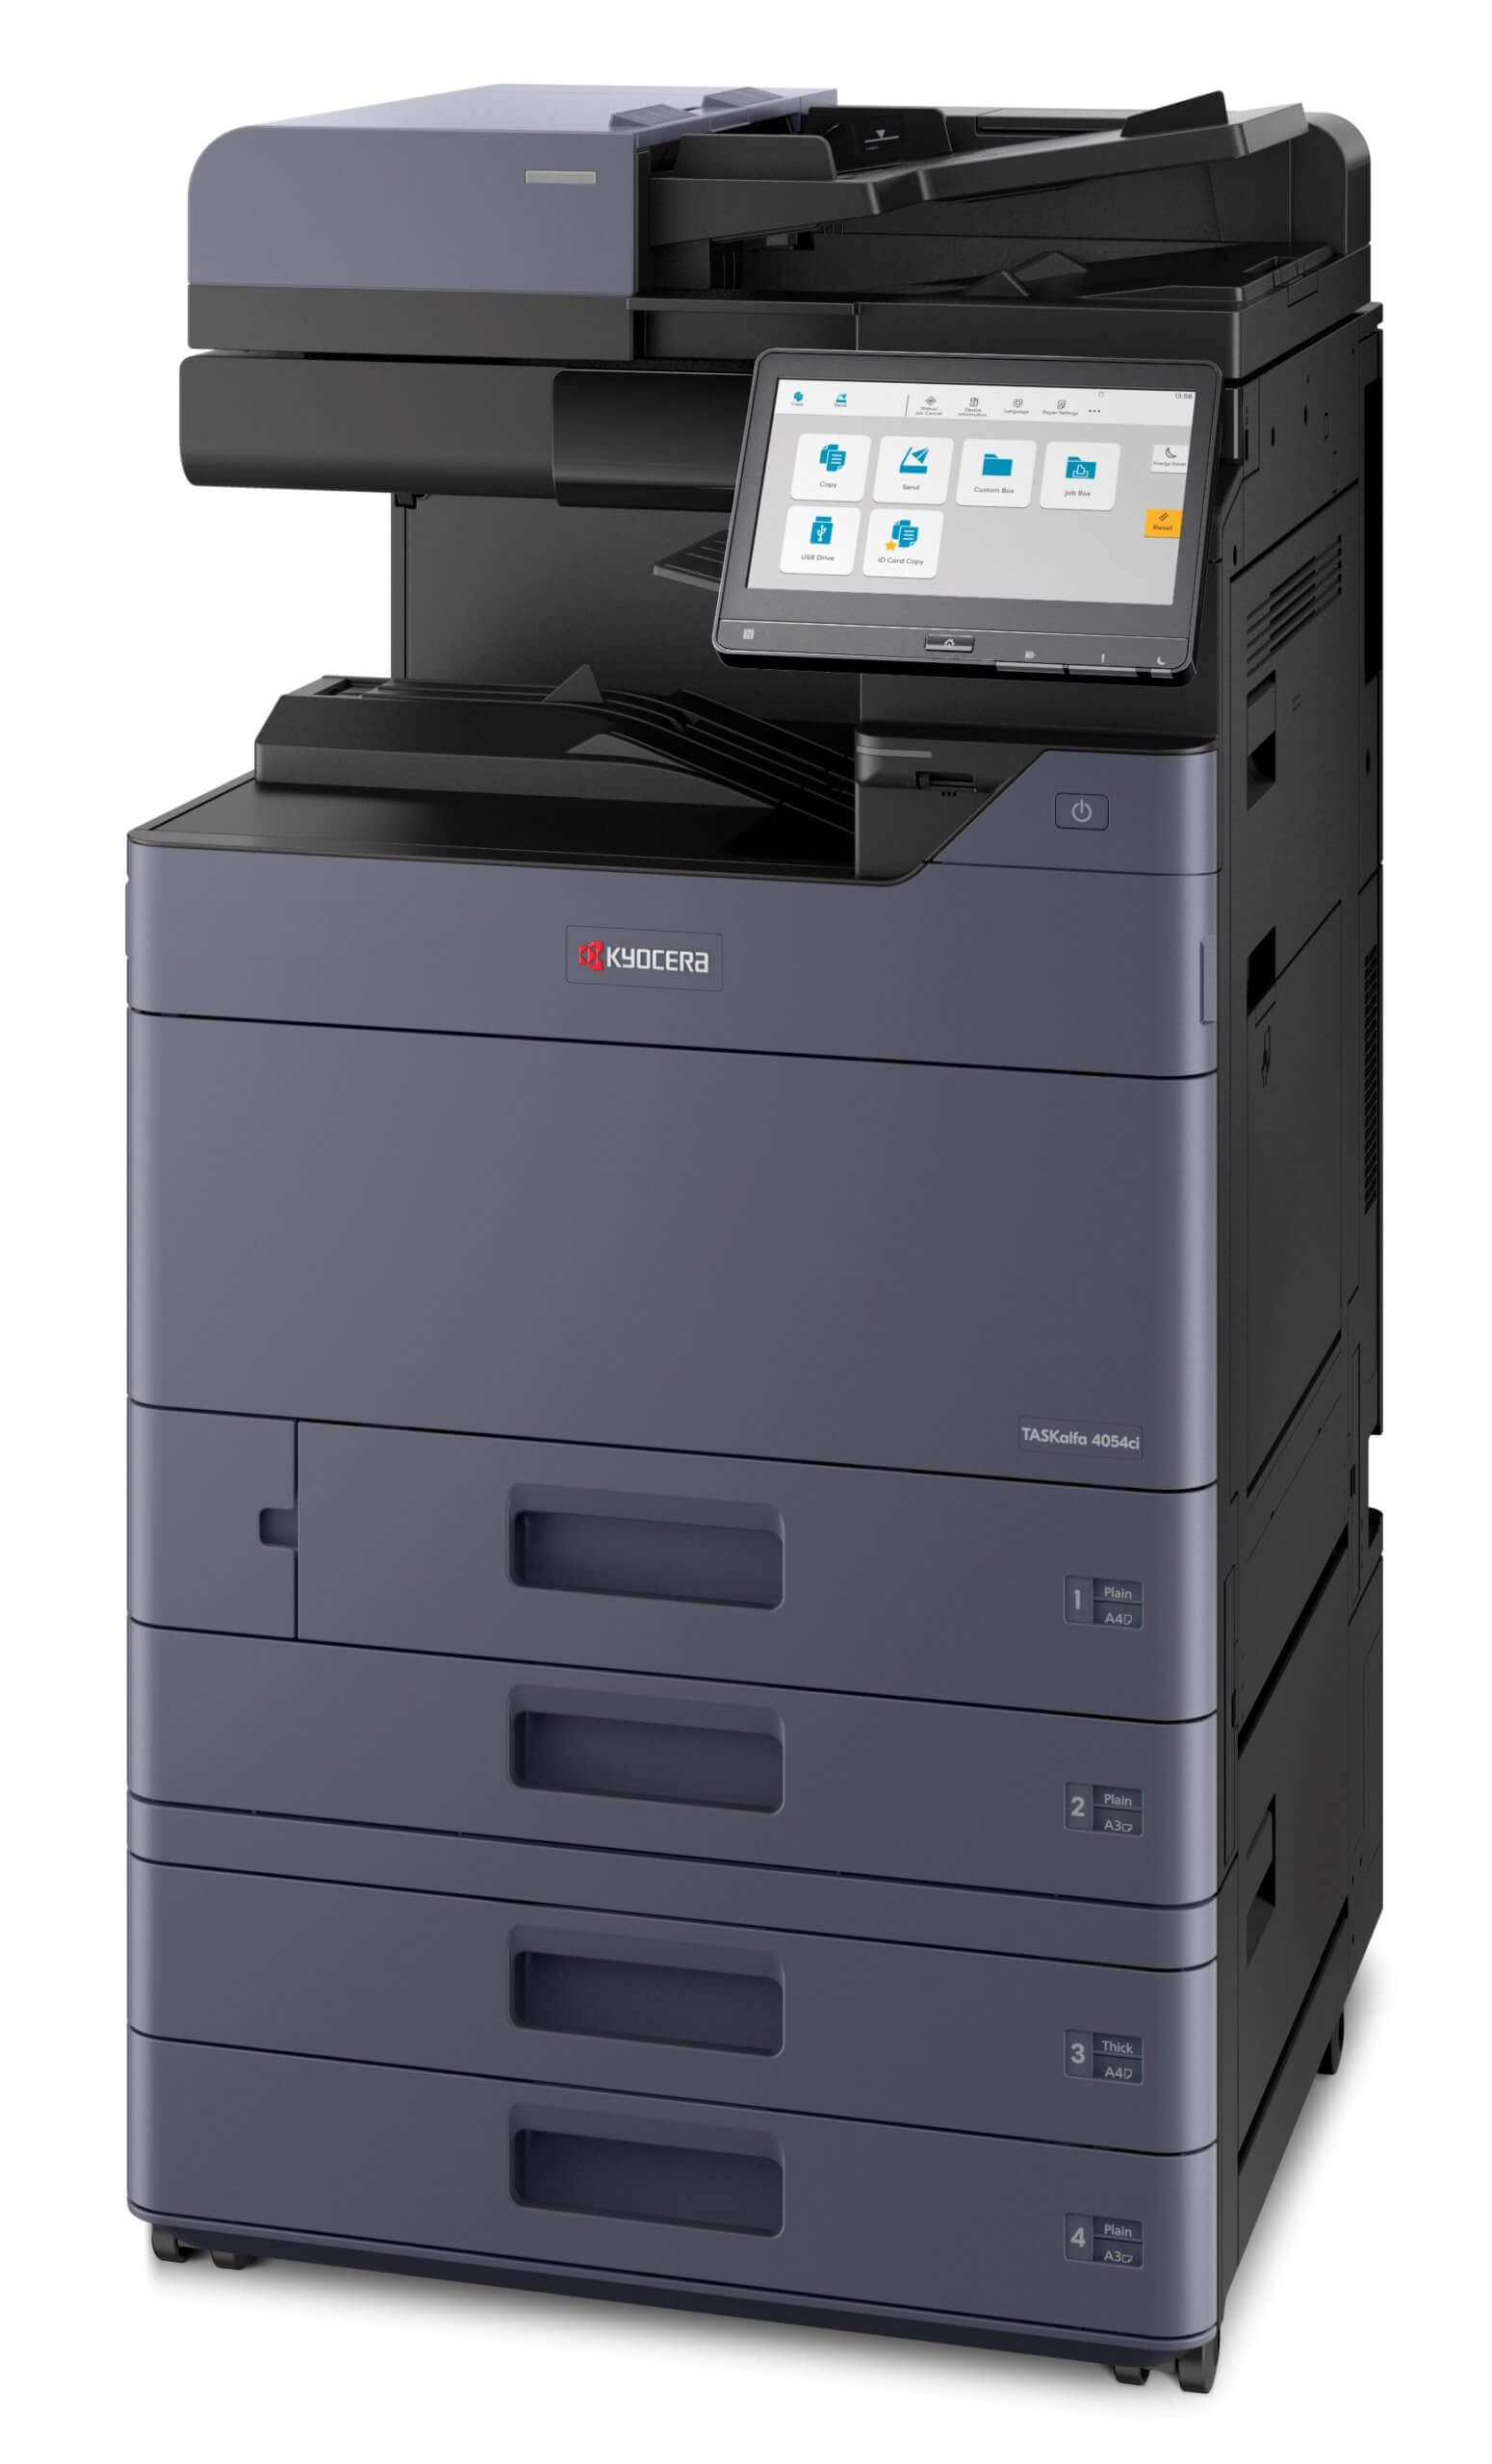 Alquiler impresora copiadora precio por copia A3 de 30 ppm empresas